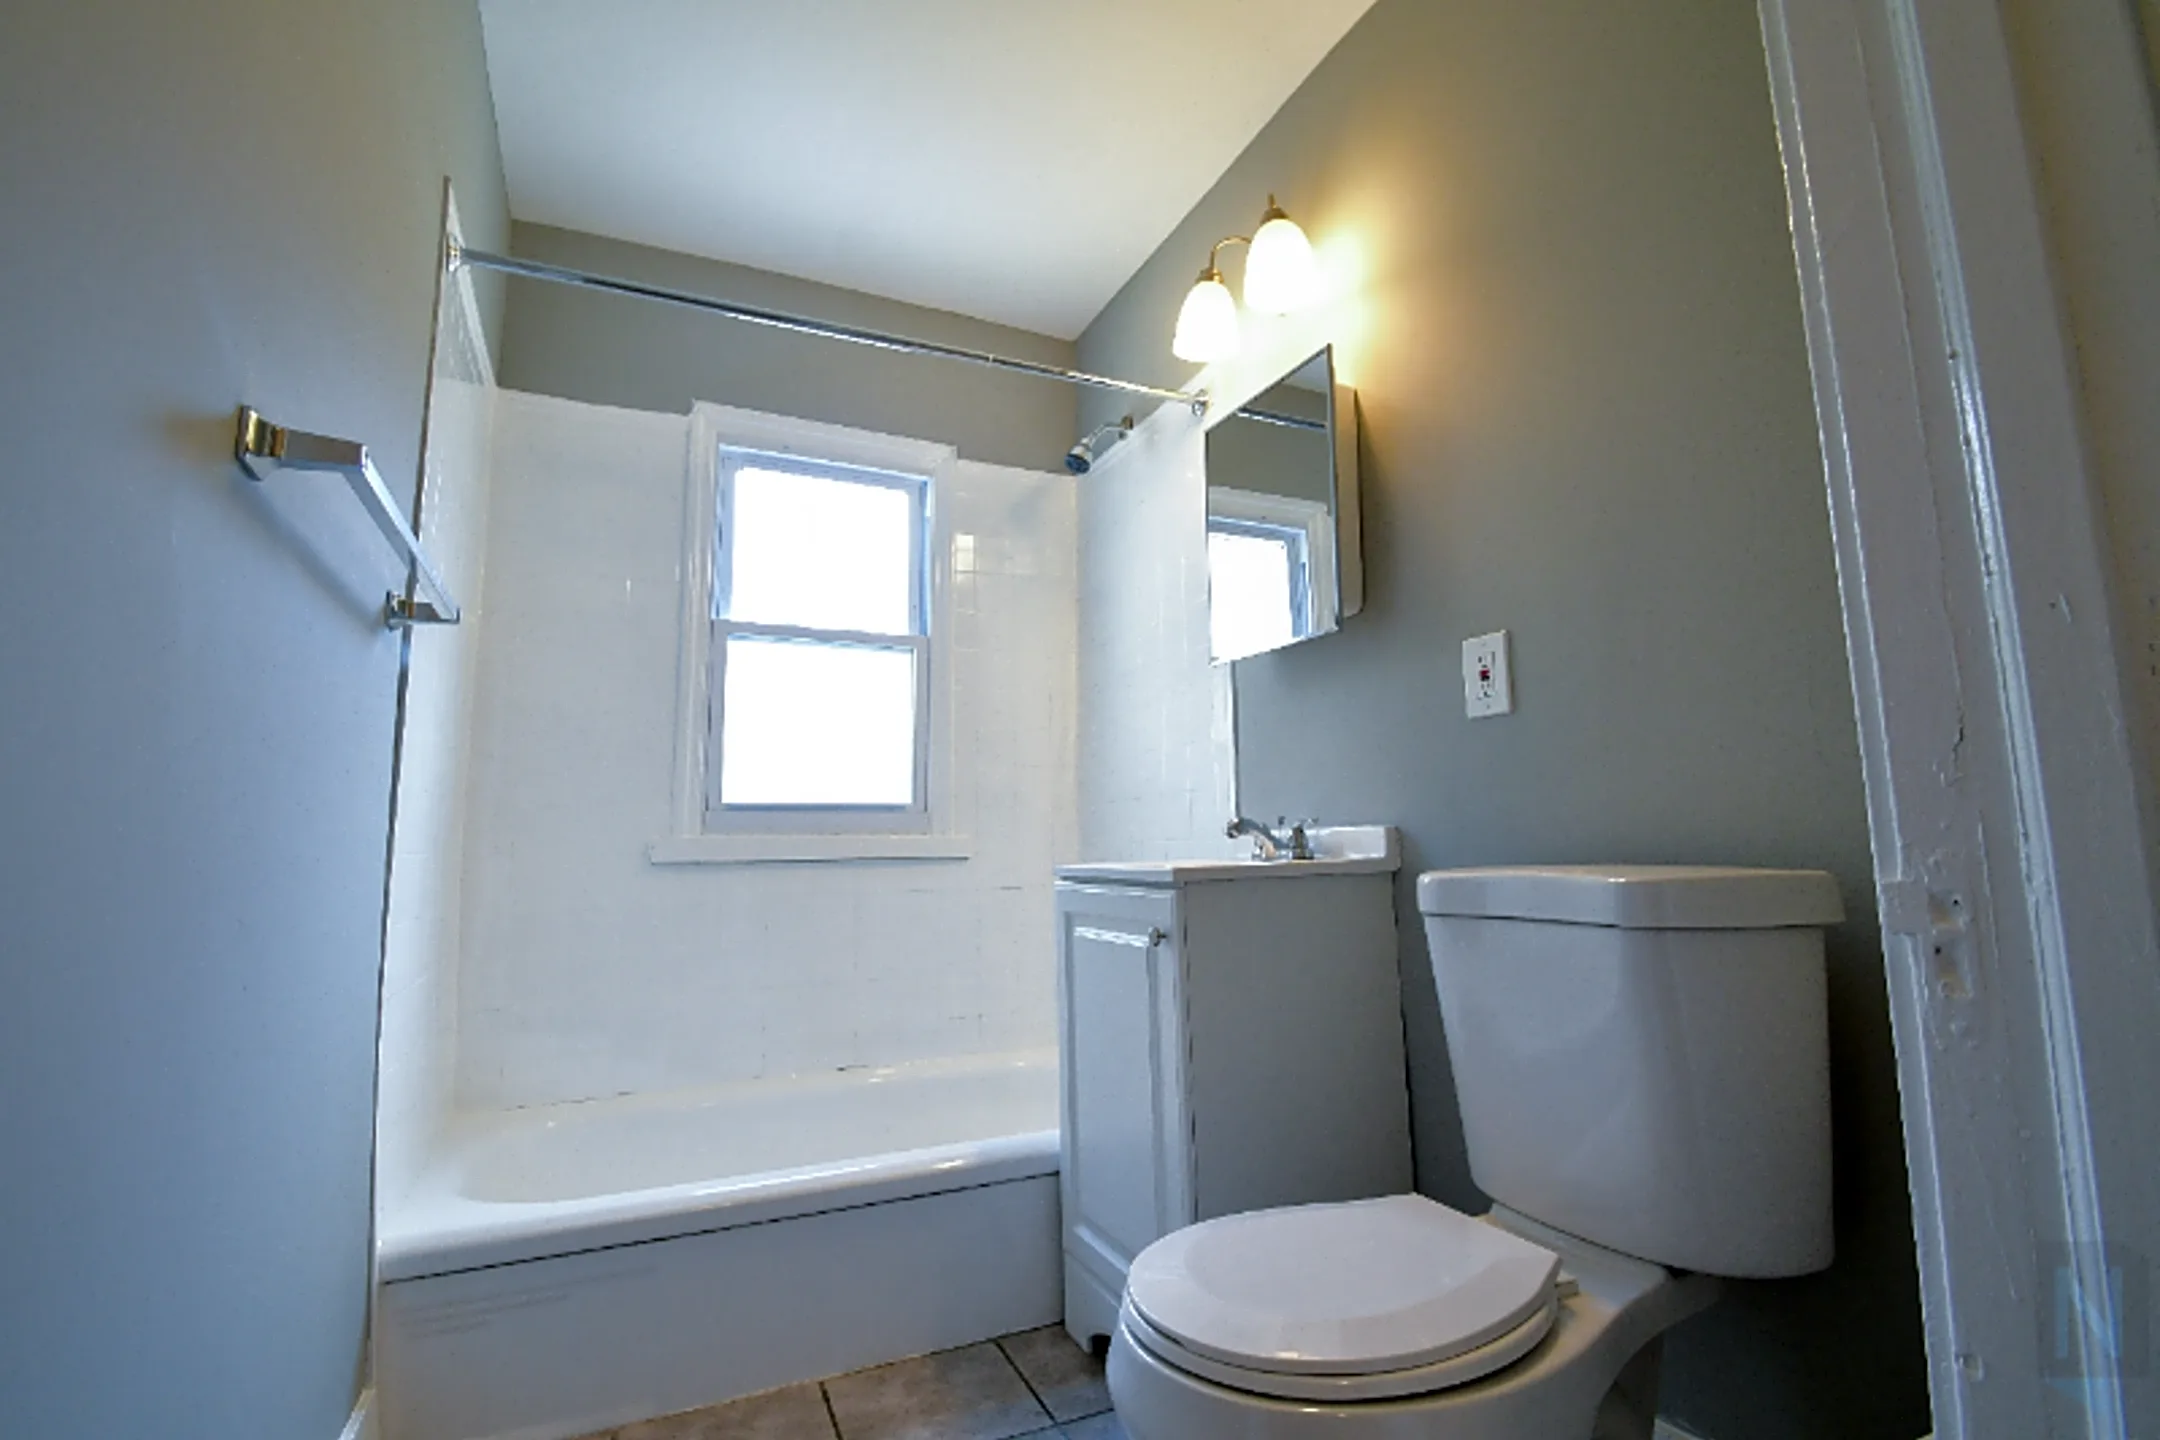 Bathroom - 318 M St NW - Washington, DC